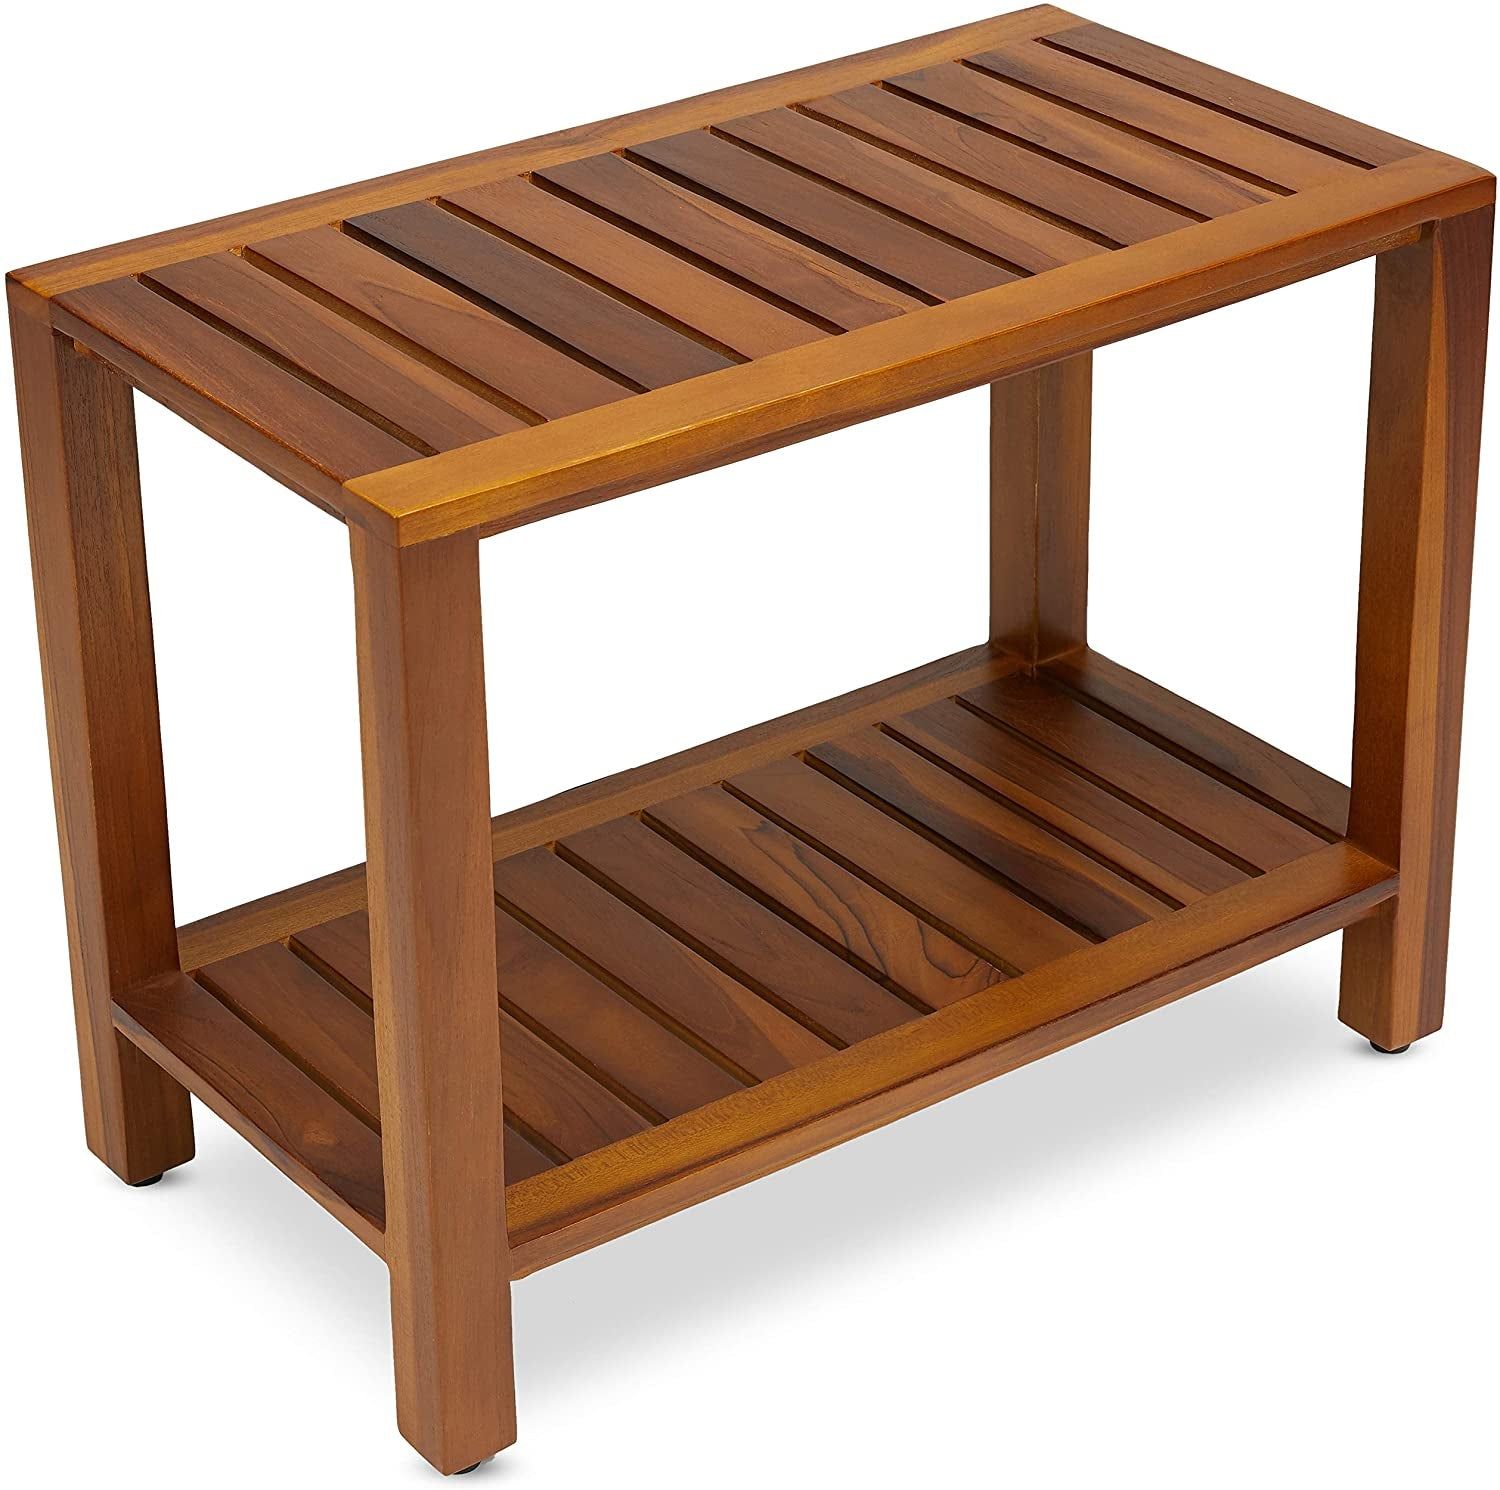 Teak wood bench with storage